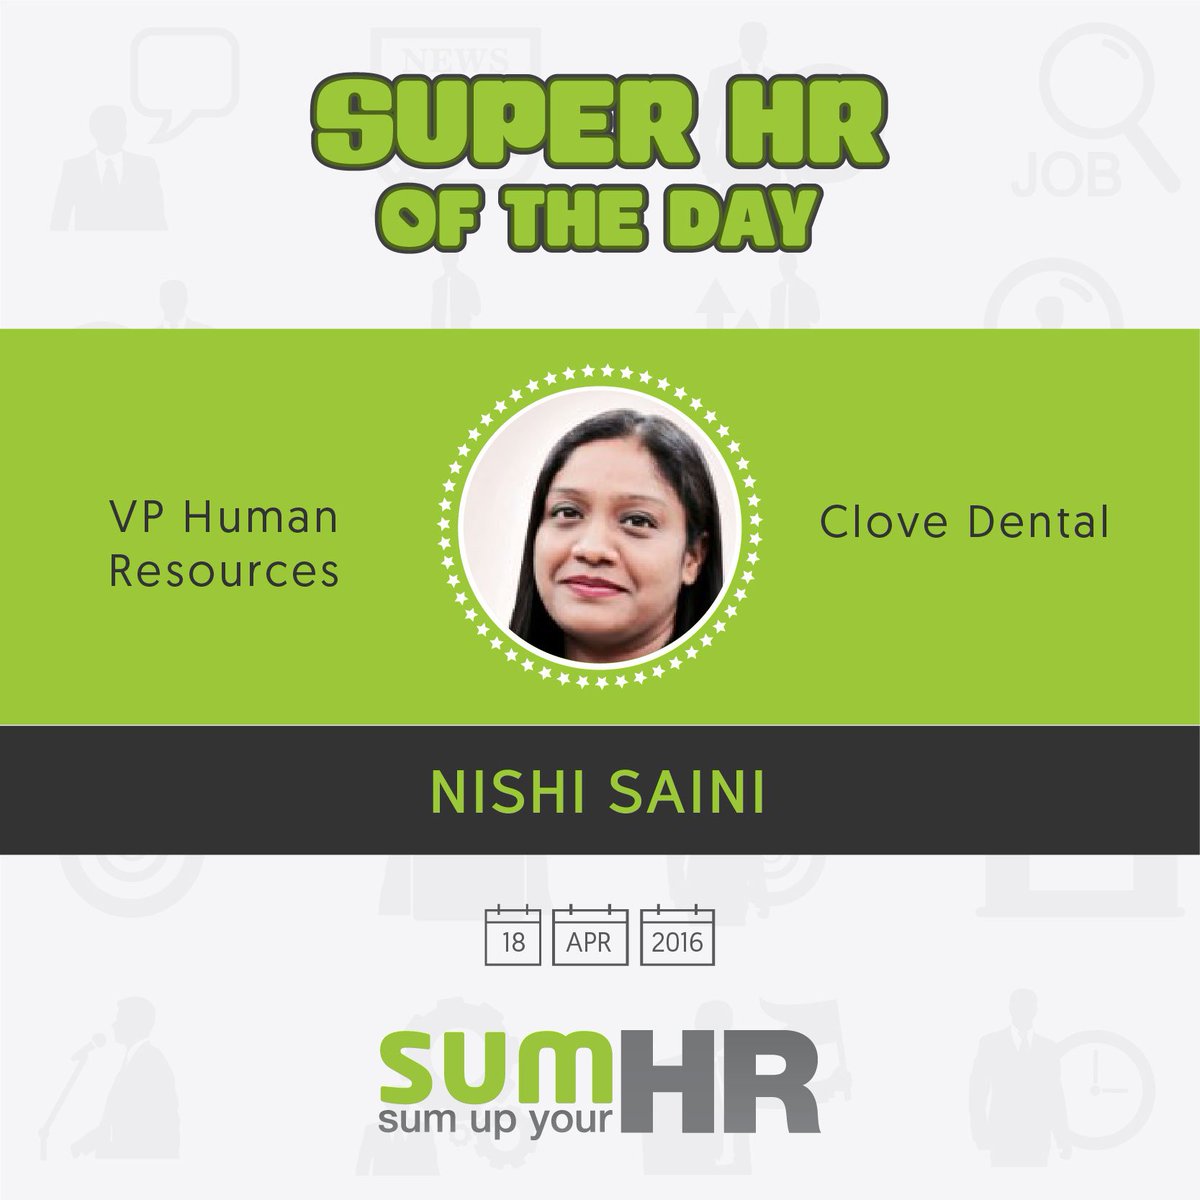 Congratulations @nishi_saini @Clove_Dental #SuperHROfTheDay #HR #Leadership #Recruitment #Management #Jobs